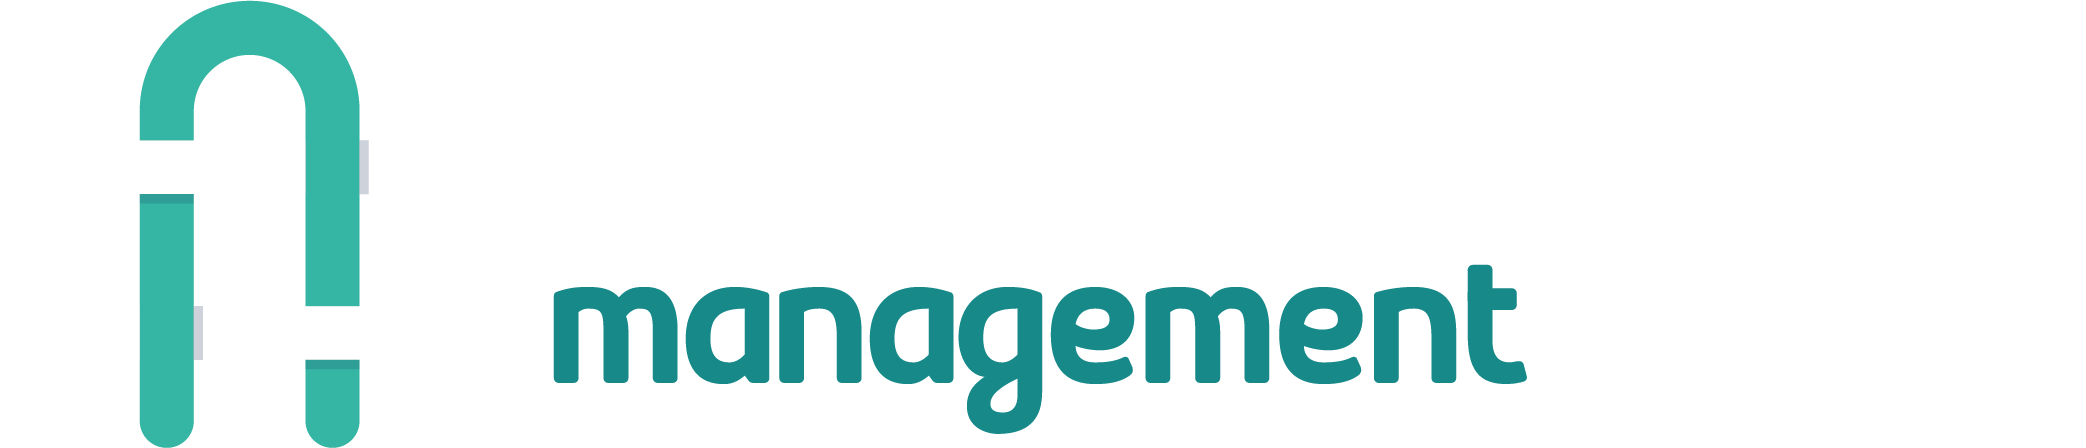 Canine Arthritis Management logo